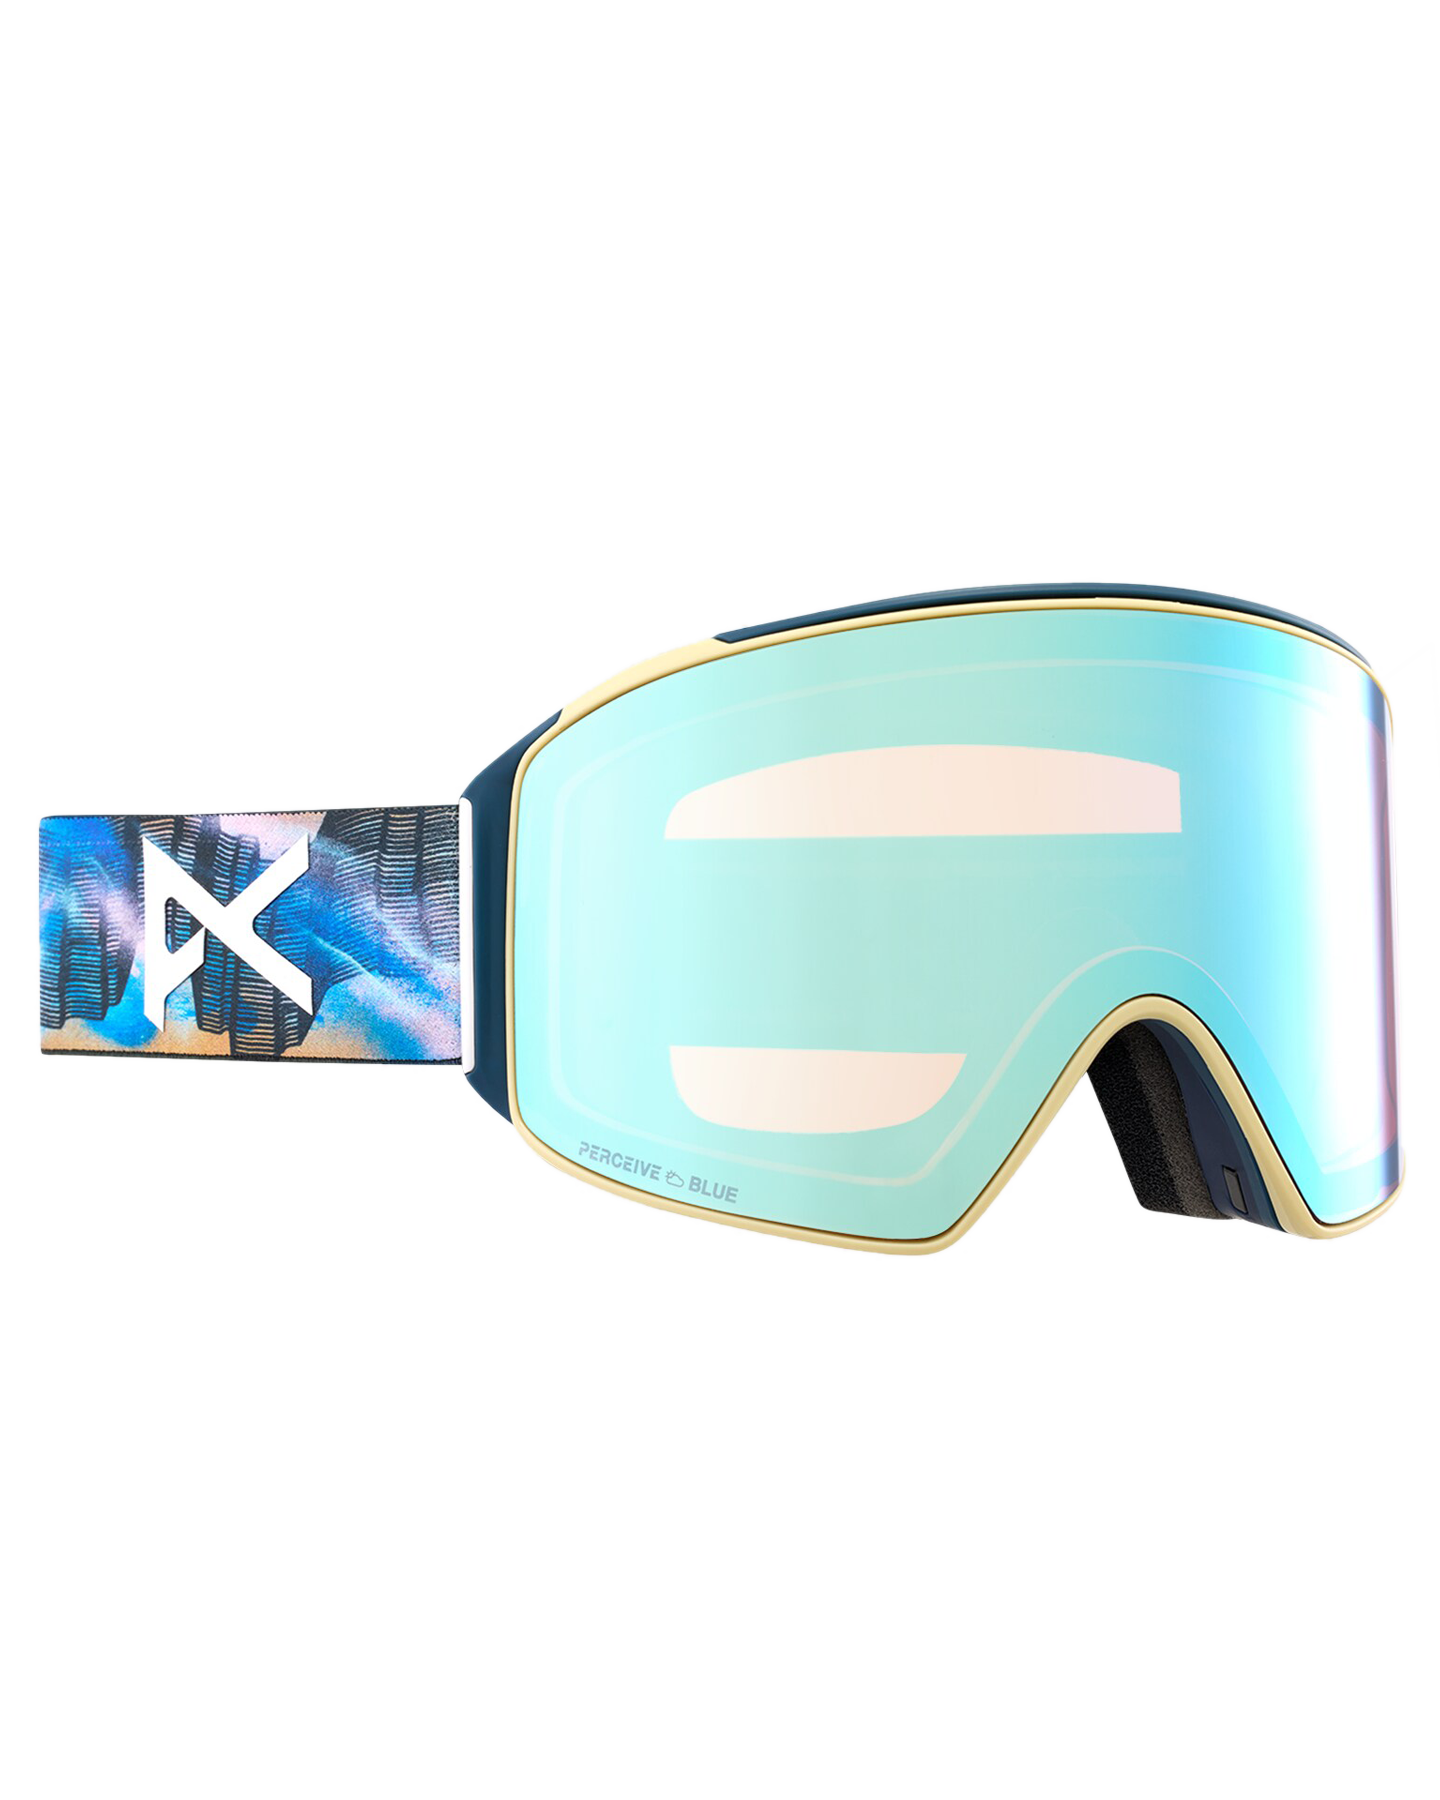 Anon M4 Cylindrical Snow Goggles + Bonus Lens + Mfi® Face Mask - Chet Malinow/Perceive Variable Blue Lens Men's Snow Goggles - Trojan Wake Ski Snow